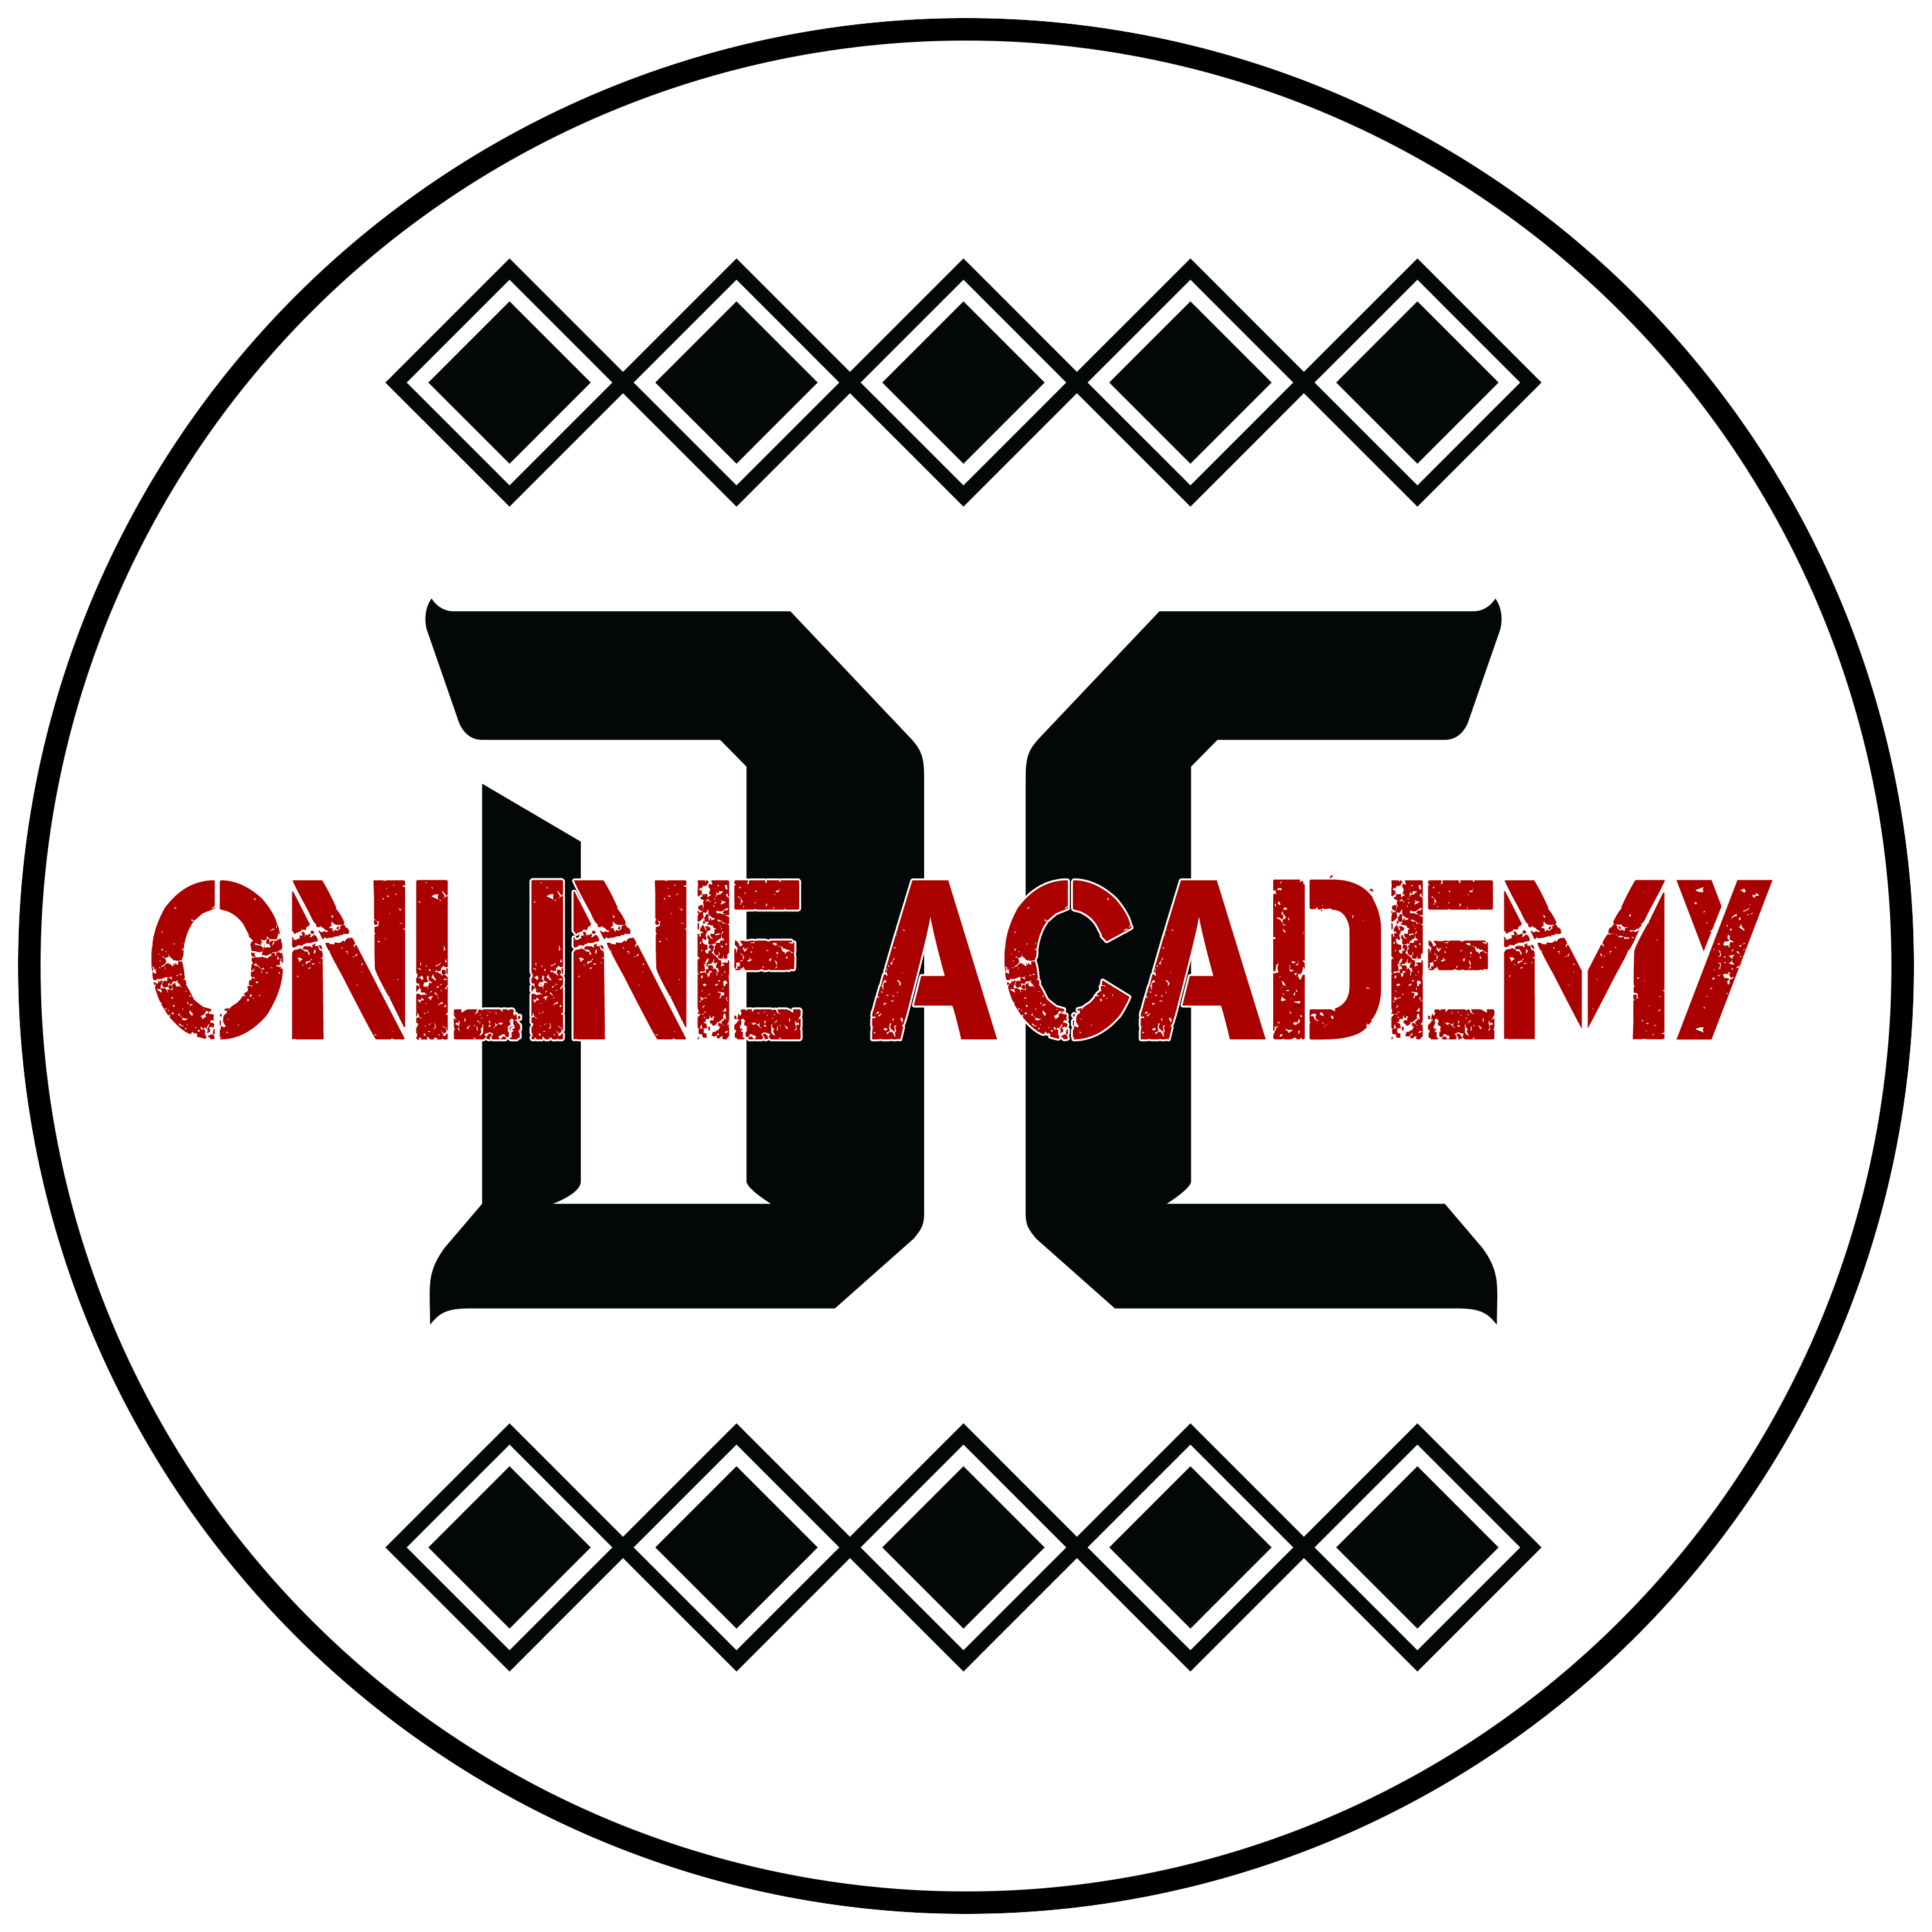 Dark Carnival Academy Logo